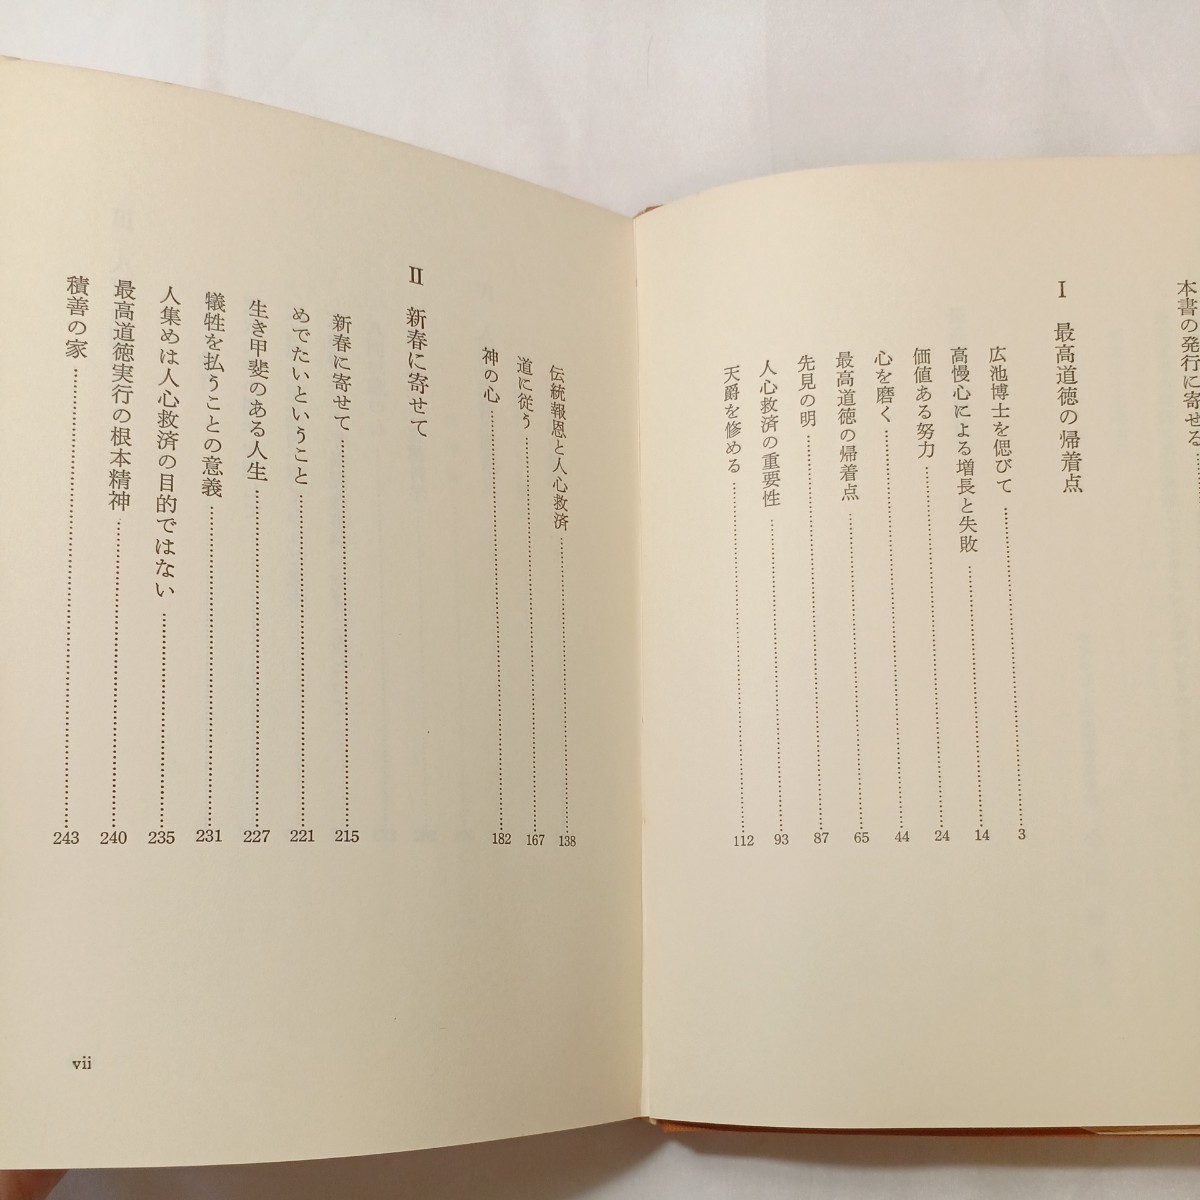 zaa-502♪最高道徳の帰着点 中田中(著) 広池学園事業部 (1978/9/20)